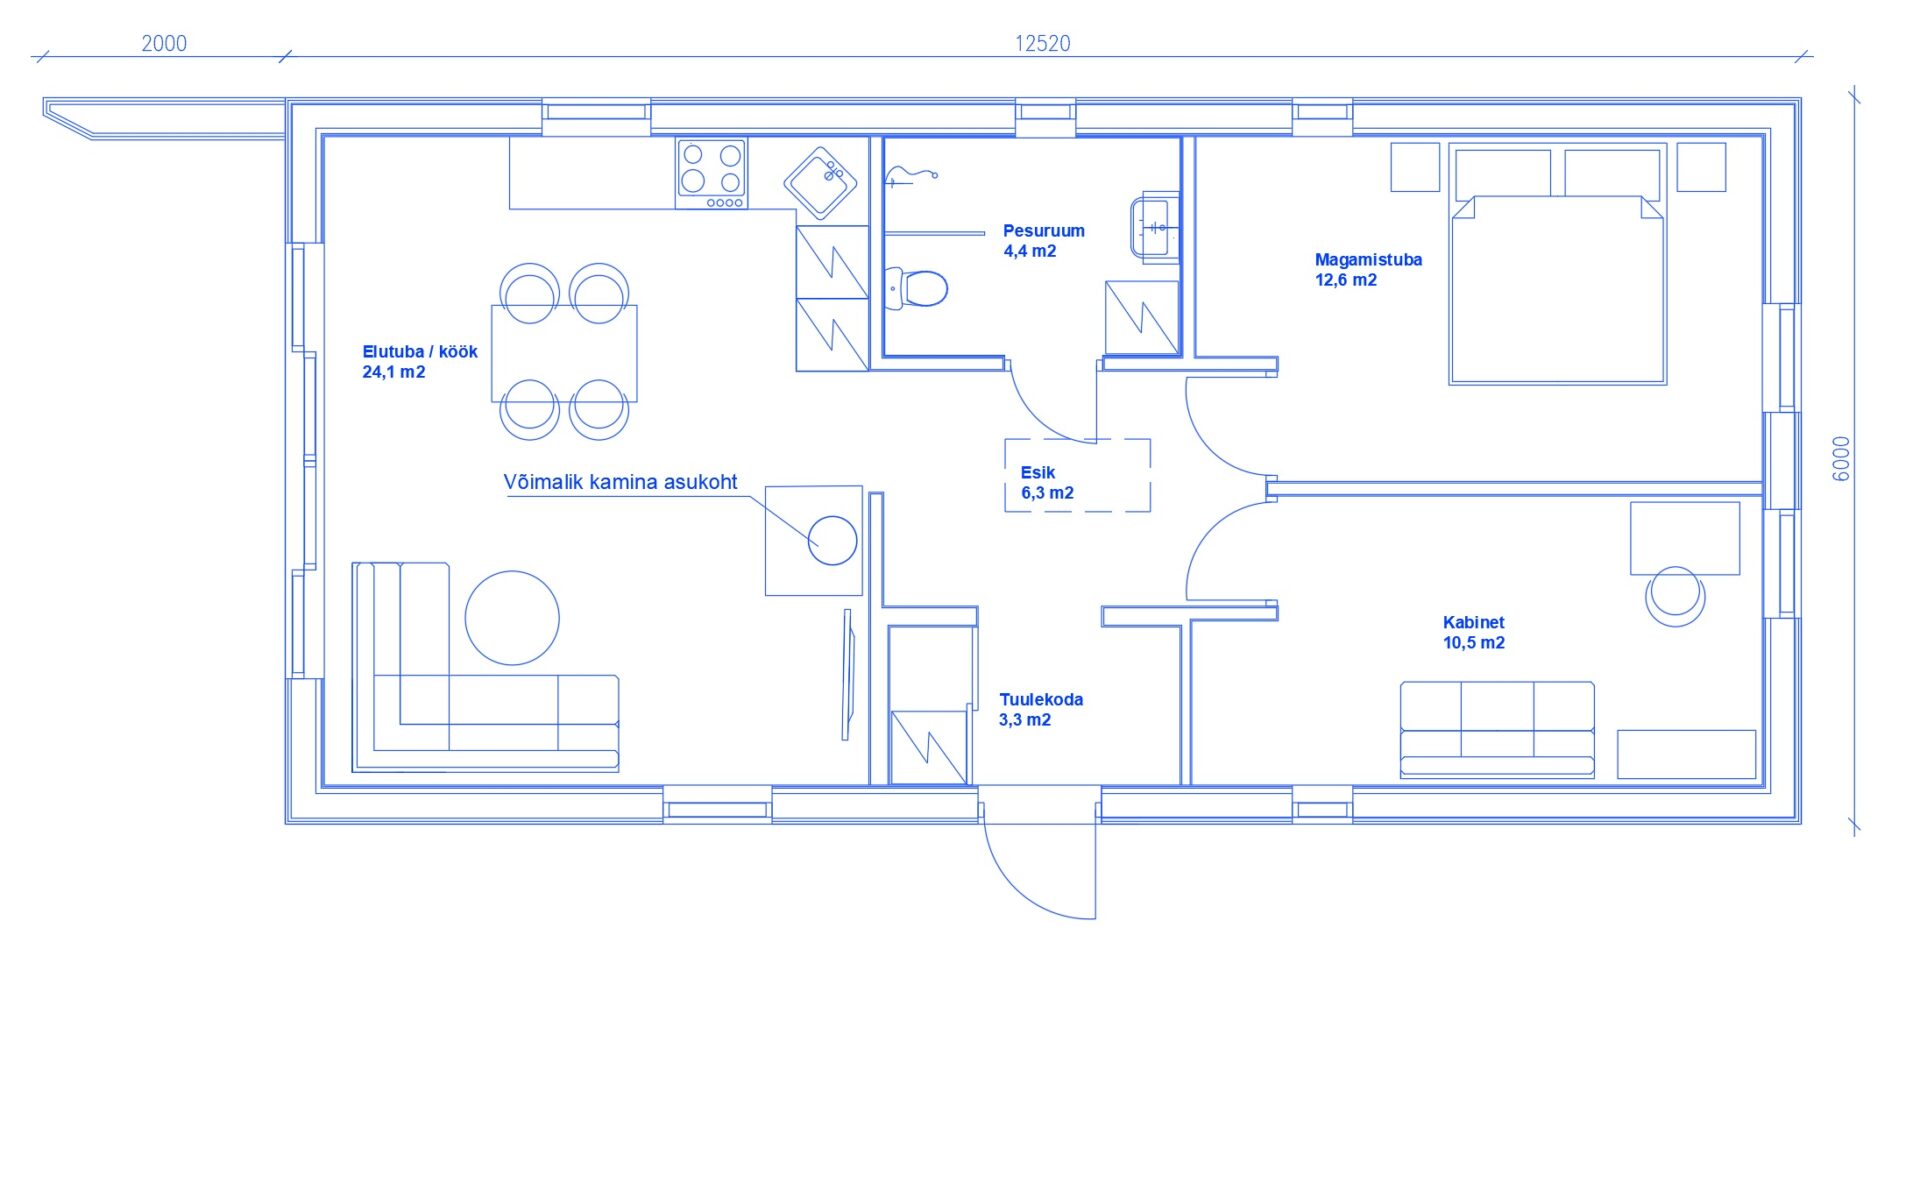 Prefab house Ketty 1-75 floor plan